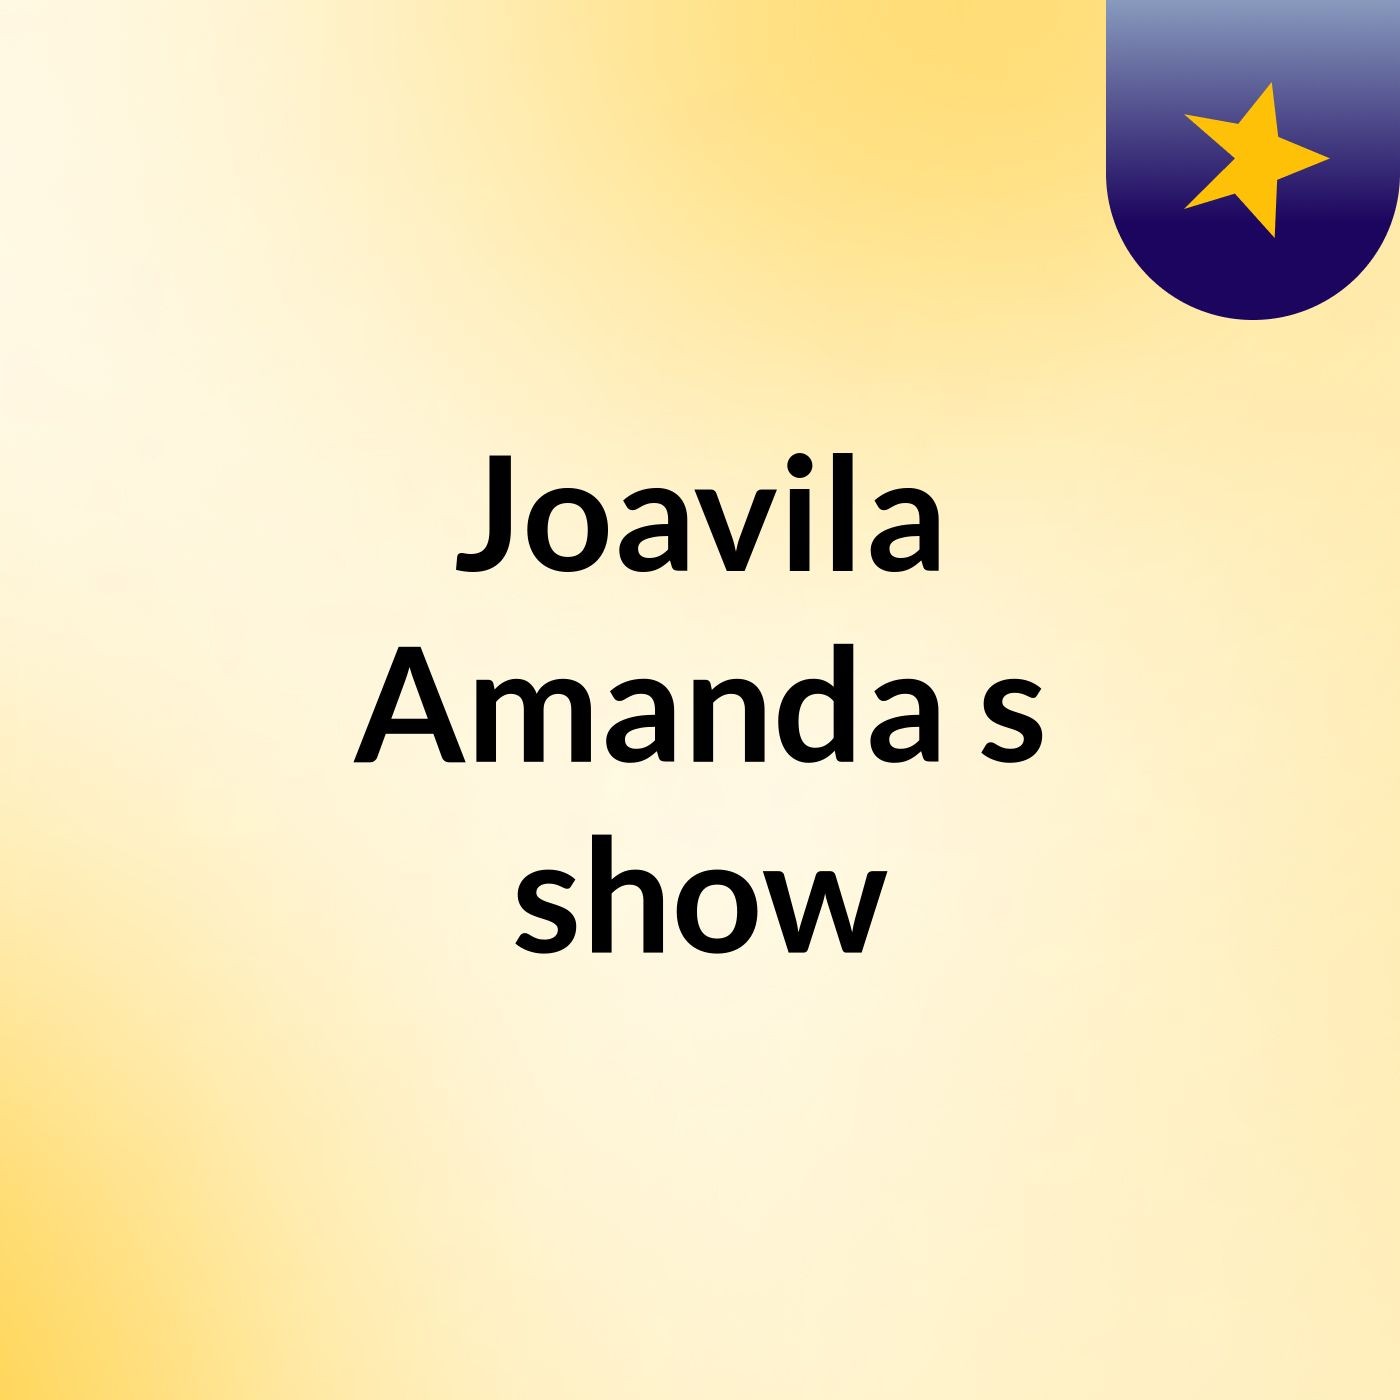 Joavila Amanda's show